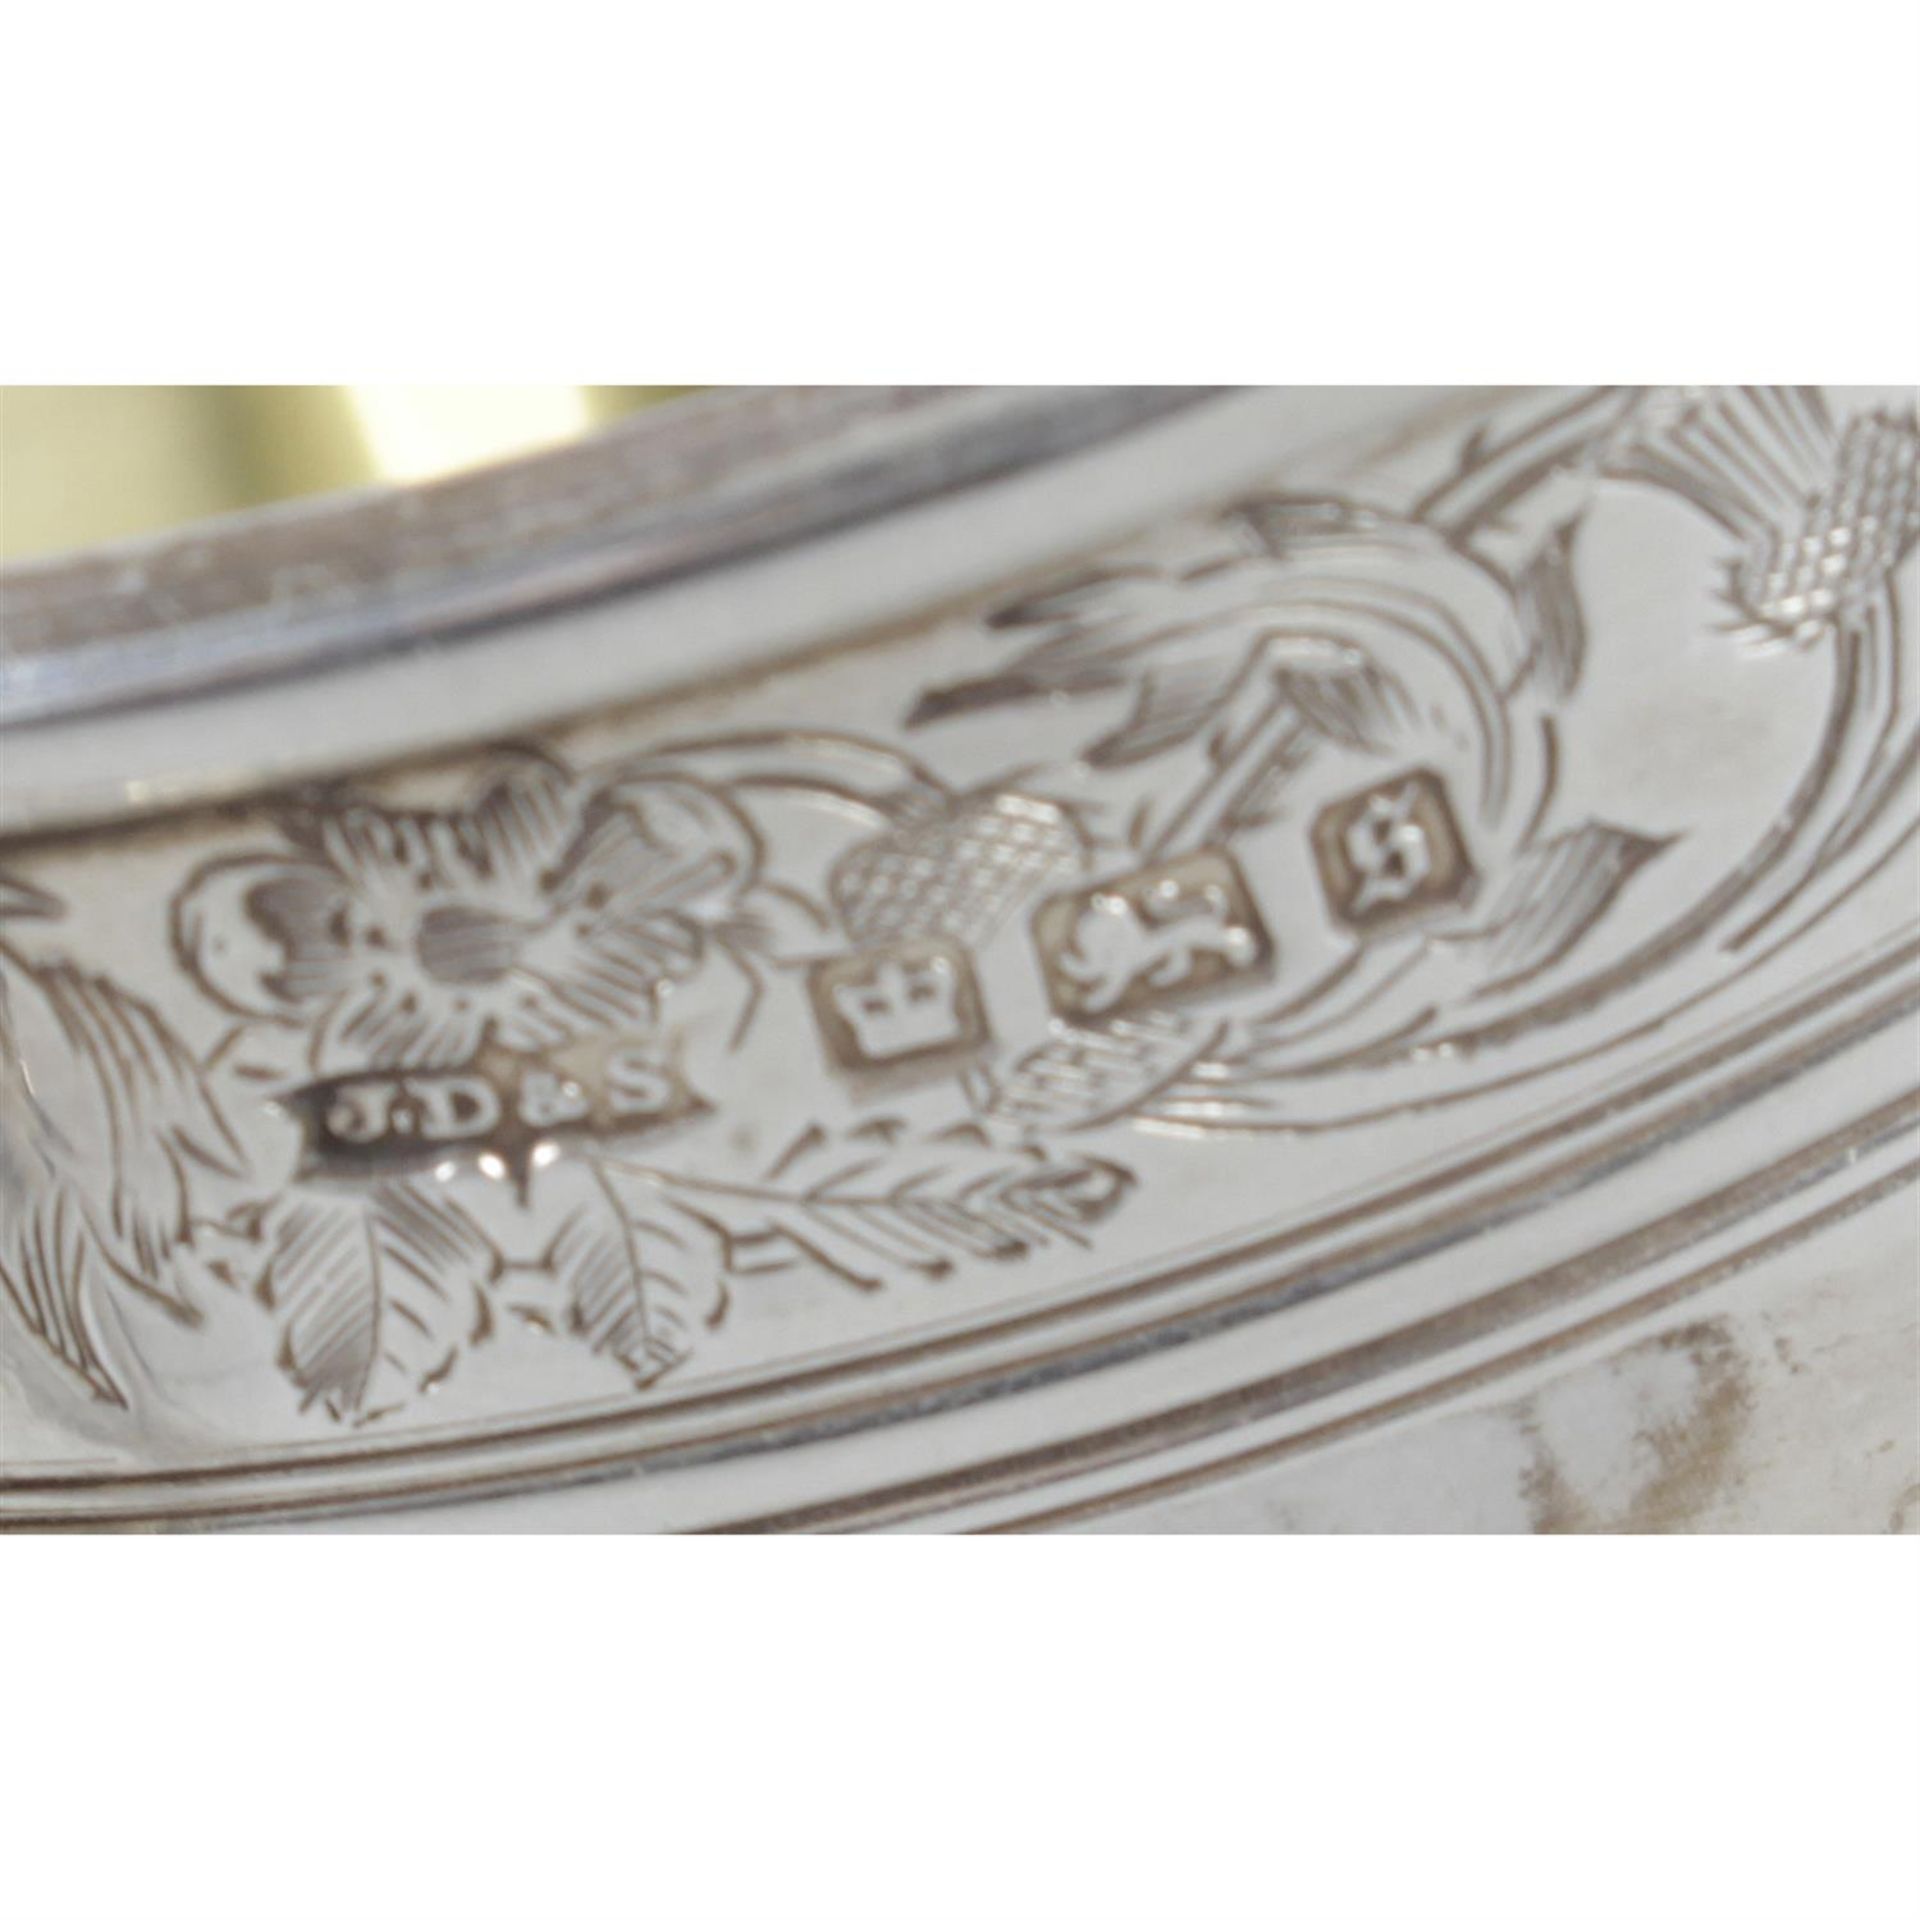 A George V silver christening mug. - Image 2 of 2